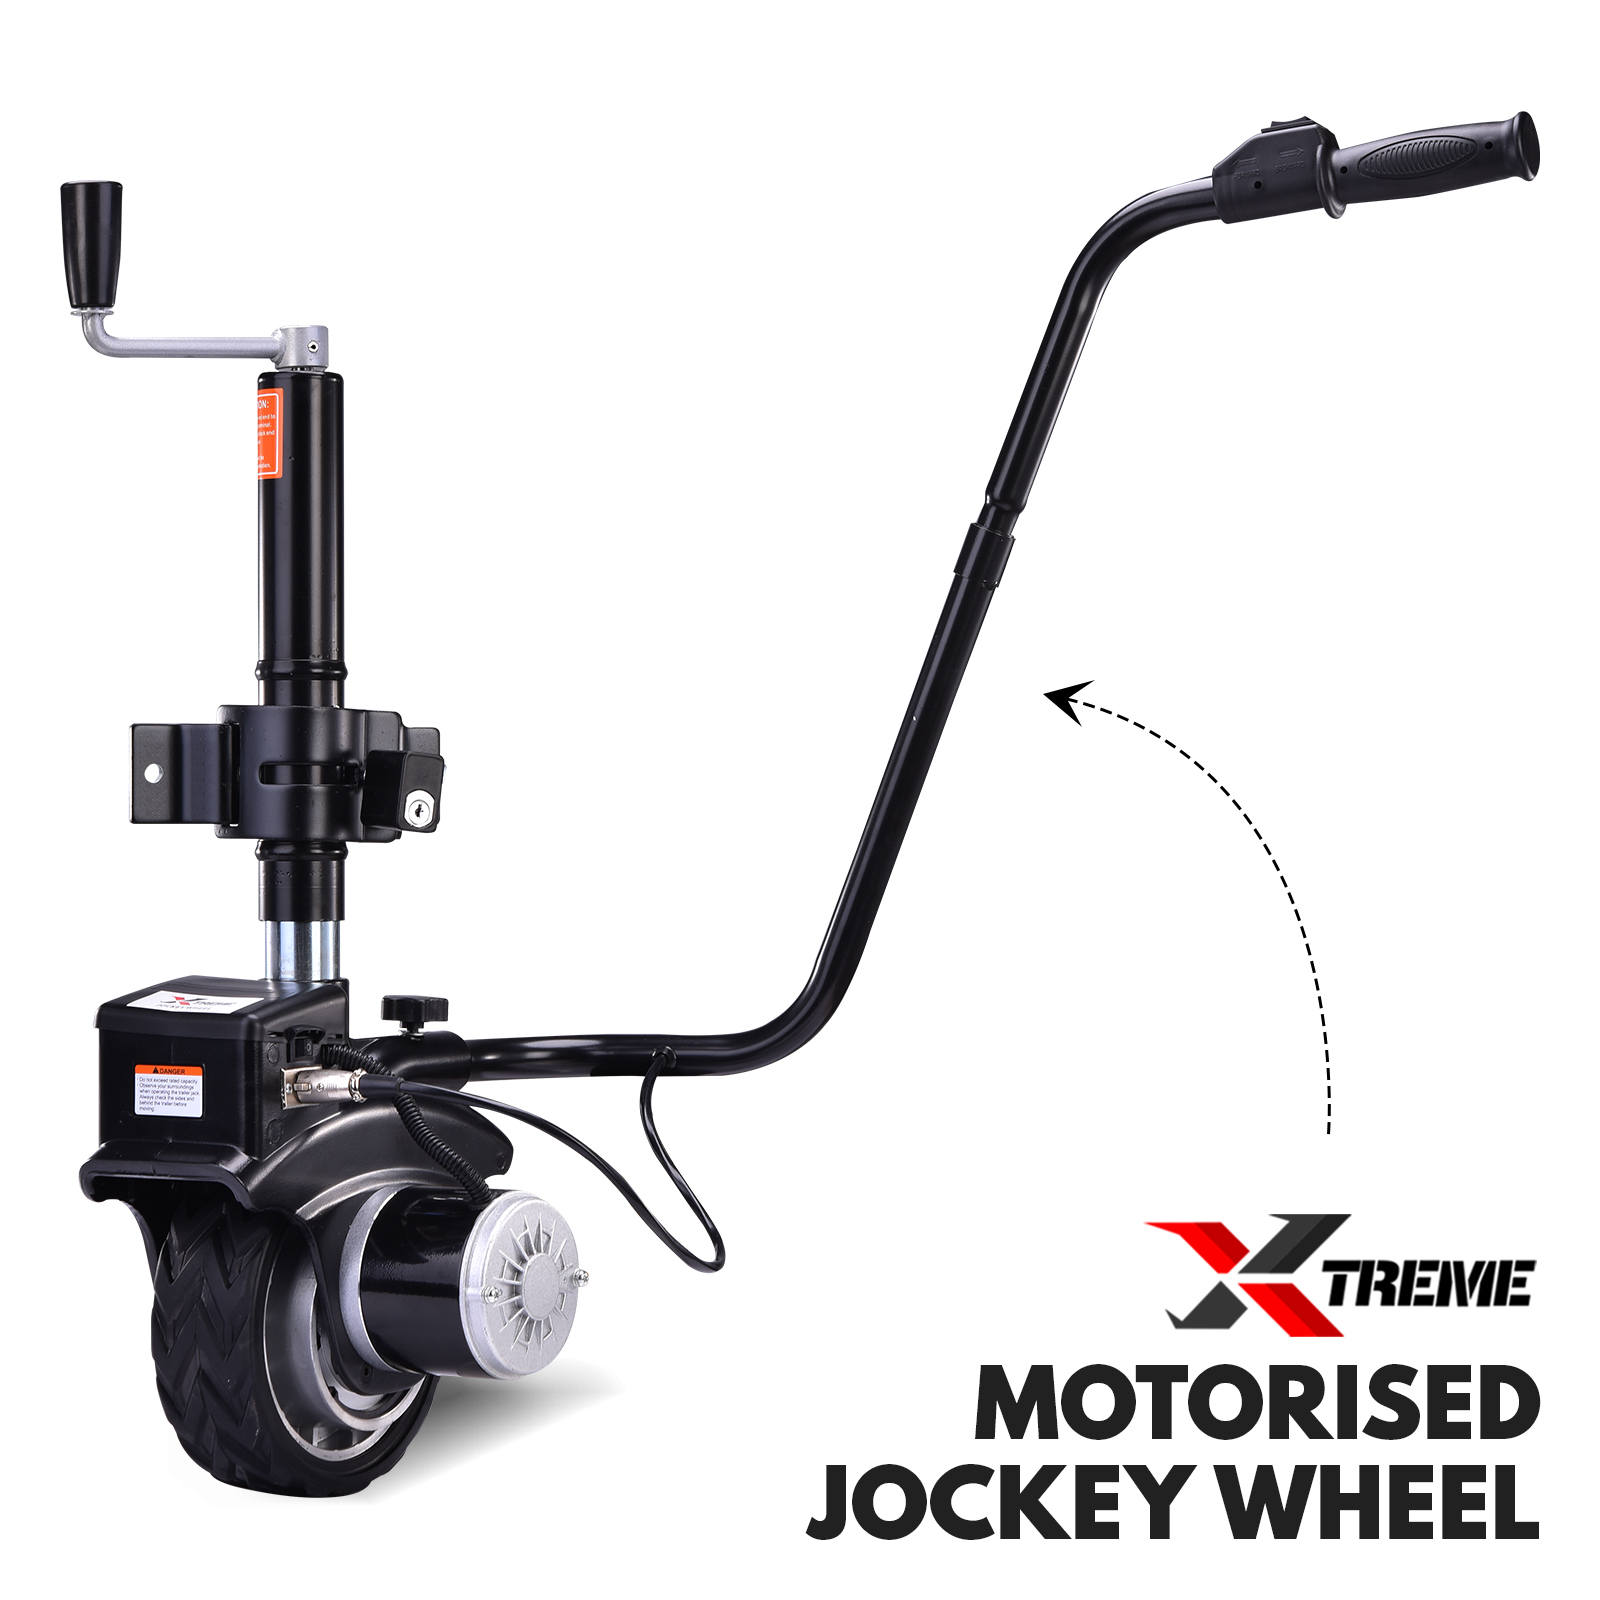 XTREME Motorised Jockey Wheel 12V 350W Electric Power Trailer Mover Caravan B